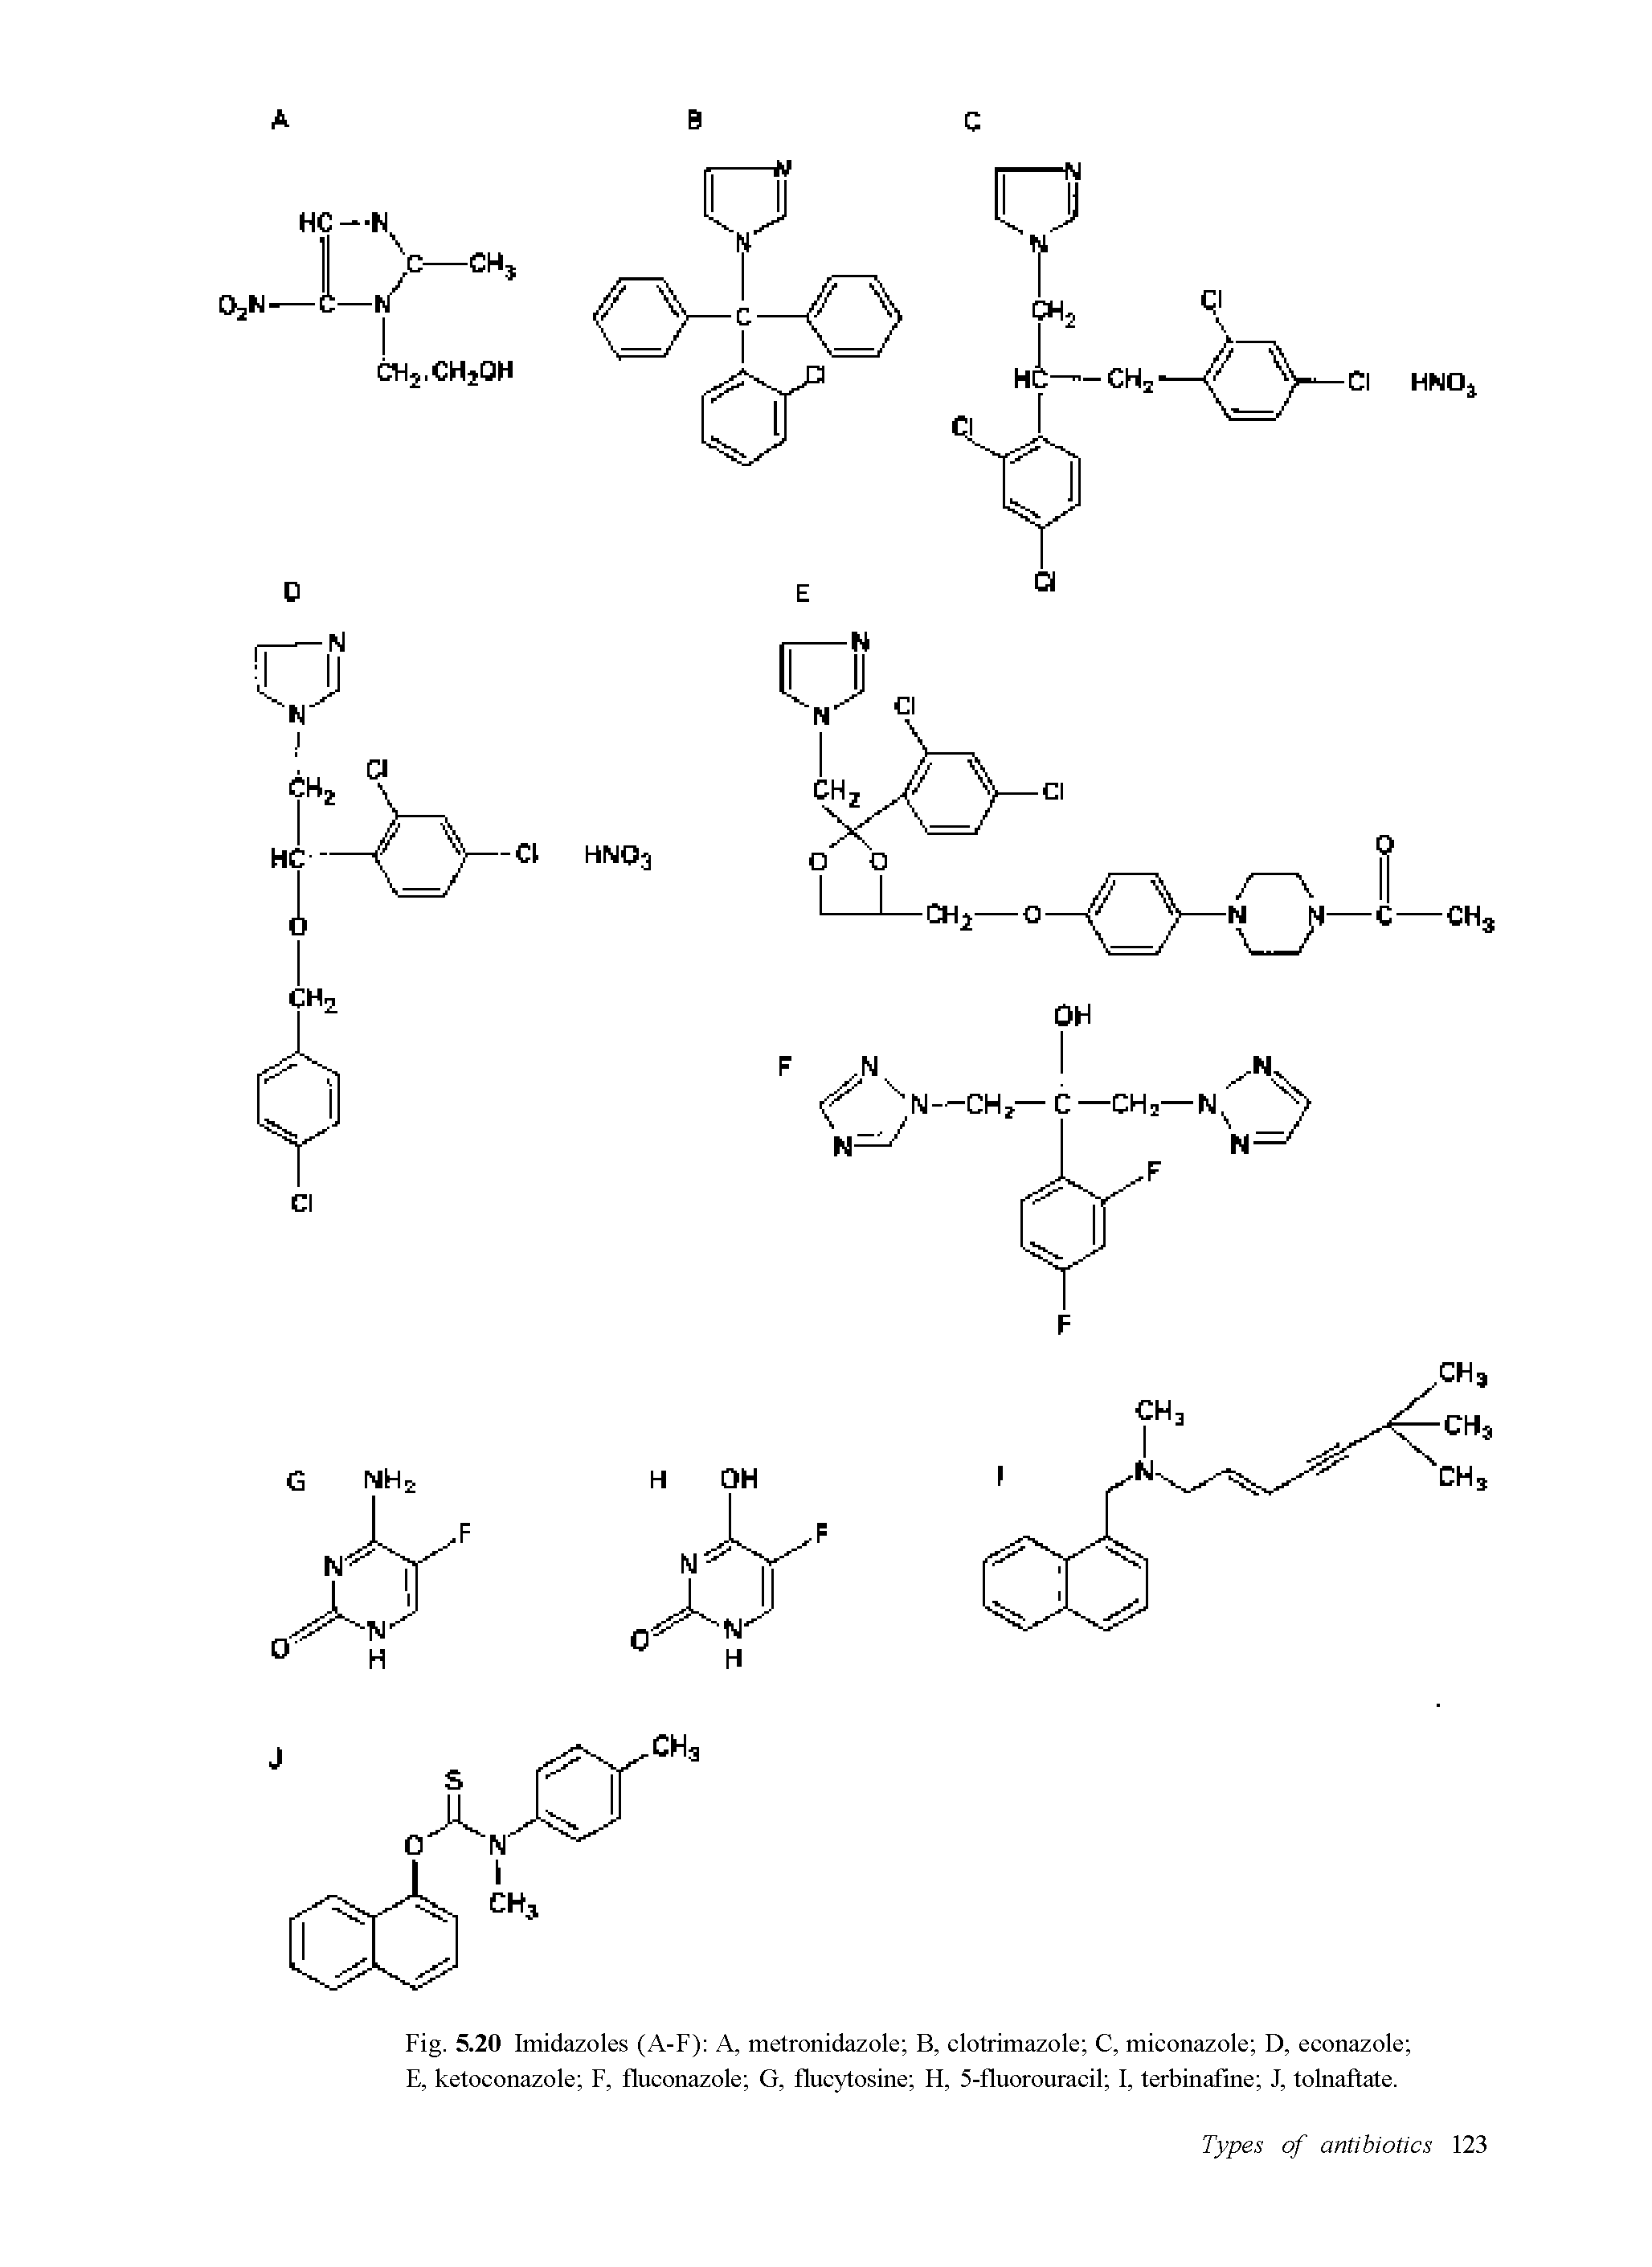 Fig. 5.20 Imidazoles (A-F) A, metronidazole B, clotrimazole C, miconazole D, econazole E, ketoconazole F, fluconazole G, flucytosine H, 5-fluorouracil I, terbinafme J, tolnaftate.